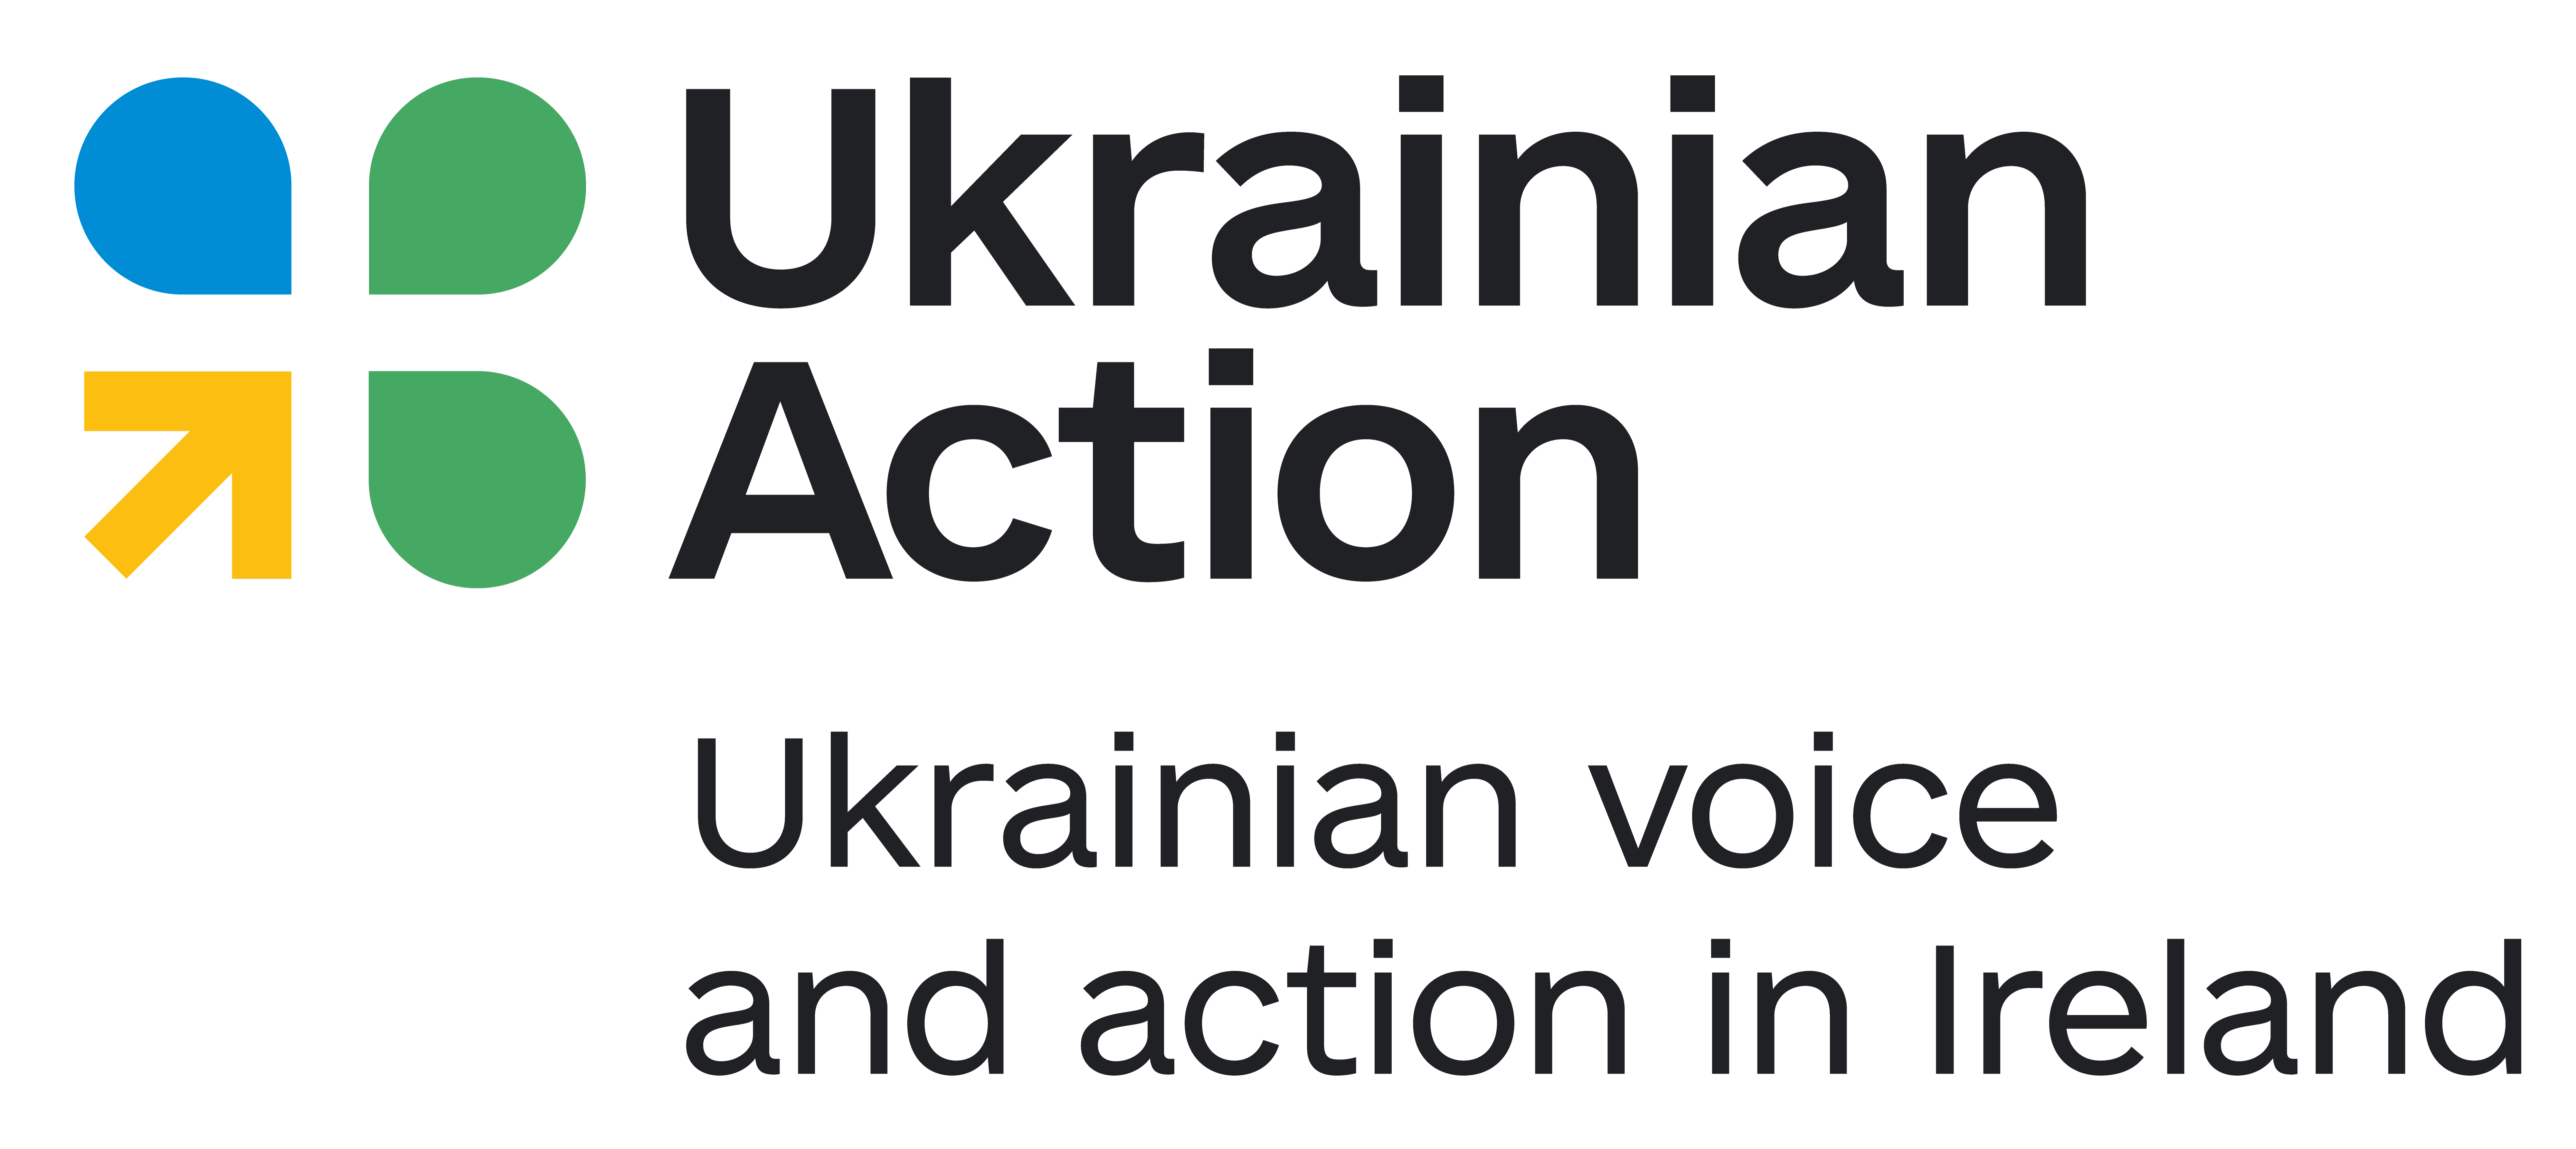 Ukrainian Action in Ireland